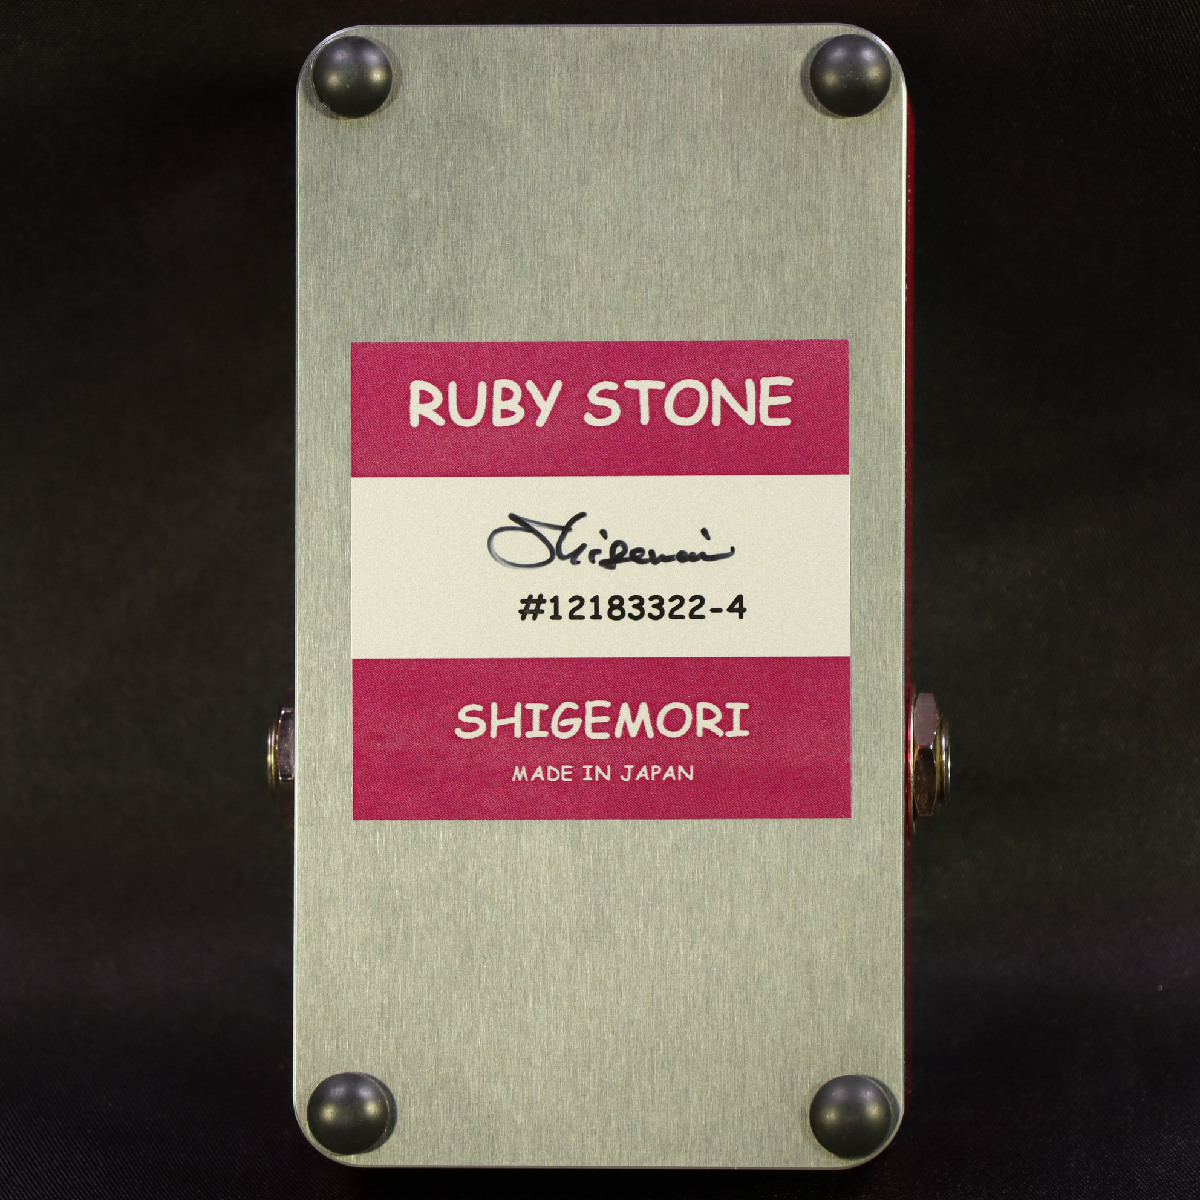 Shigemori RUBY STONE NEWバージョン オーバードライブ【WEBSHOP